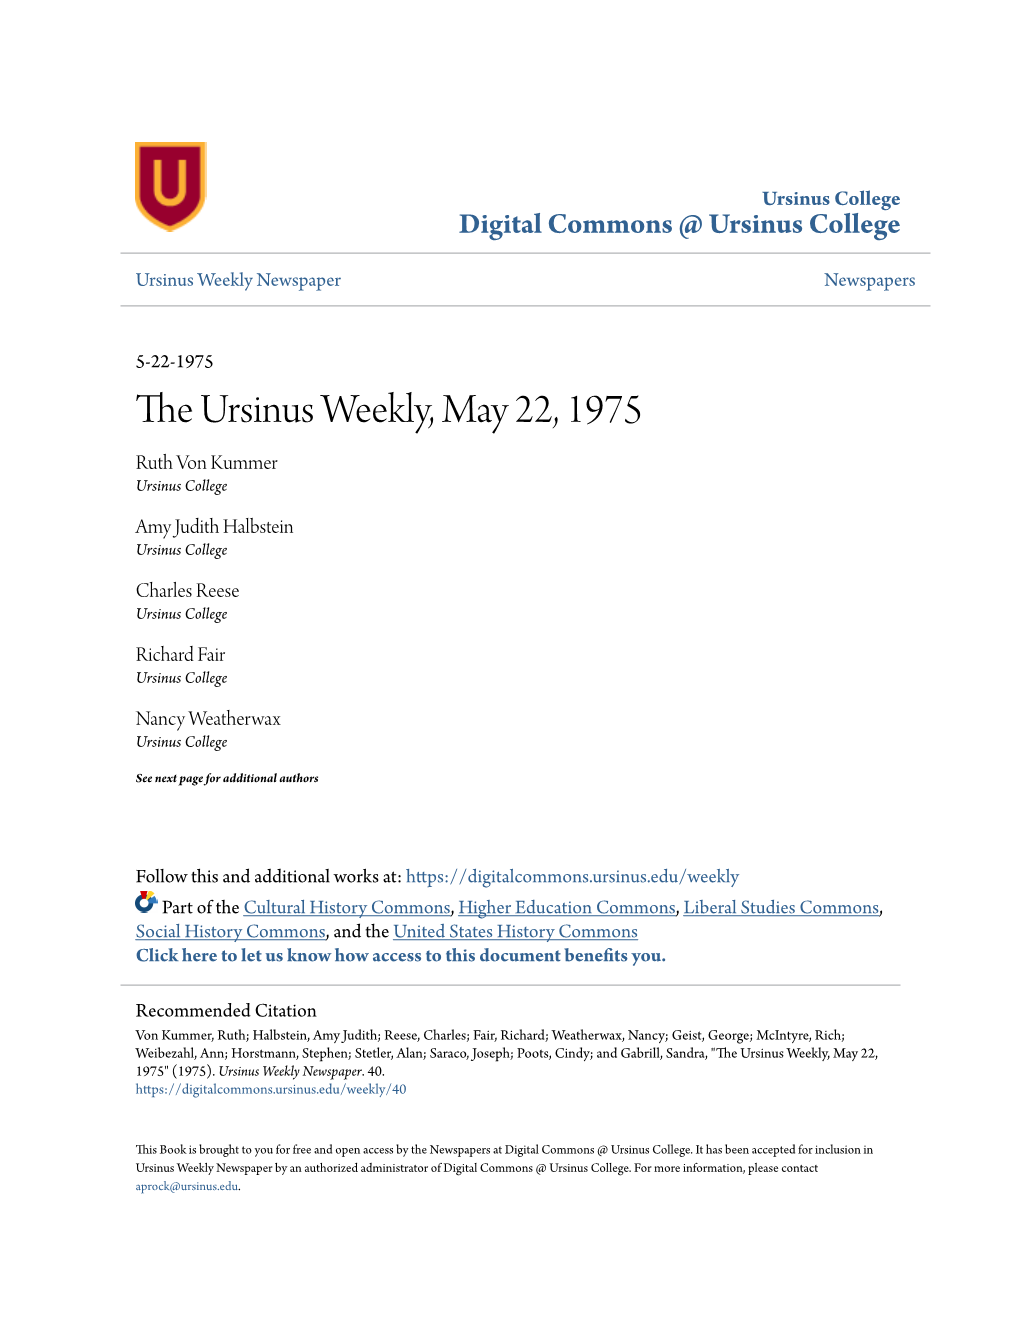 The Ursinus Weekly, May 22, 1975